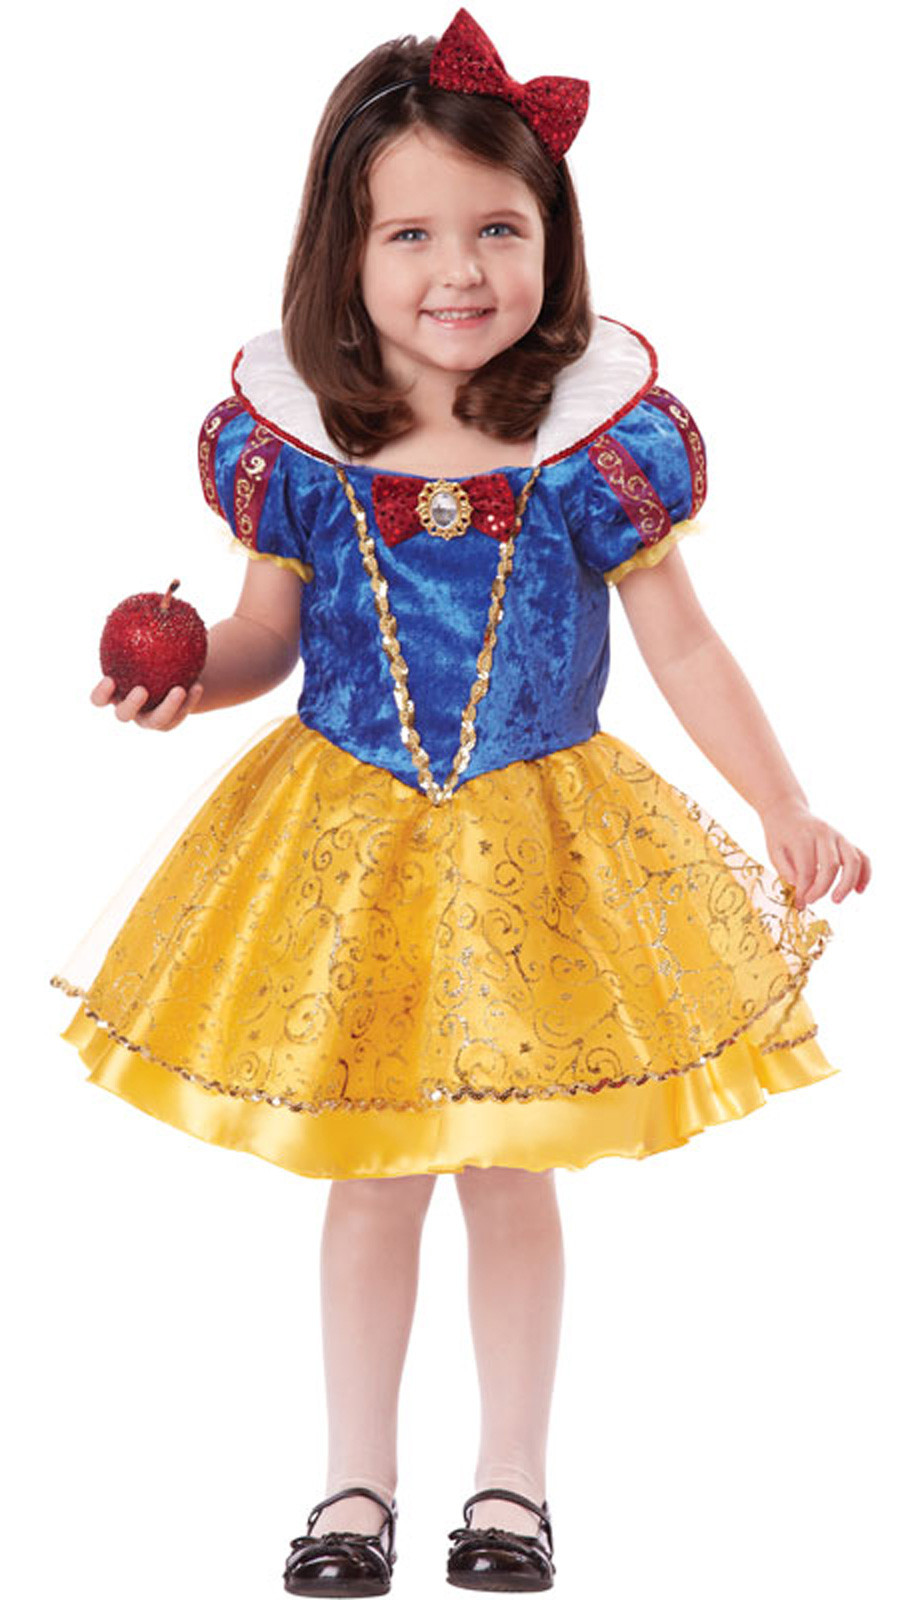 DIY Snow White Costume Toddler
 SNOW WHITE Costume Princess Dress Girls Child Toddler 3 4 4 6